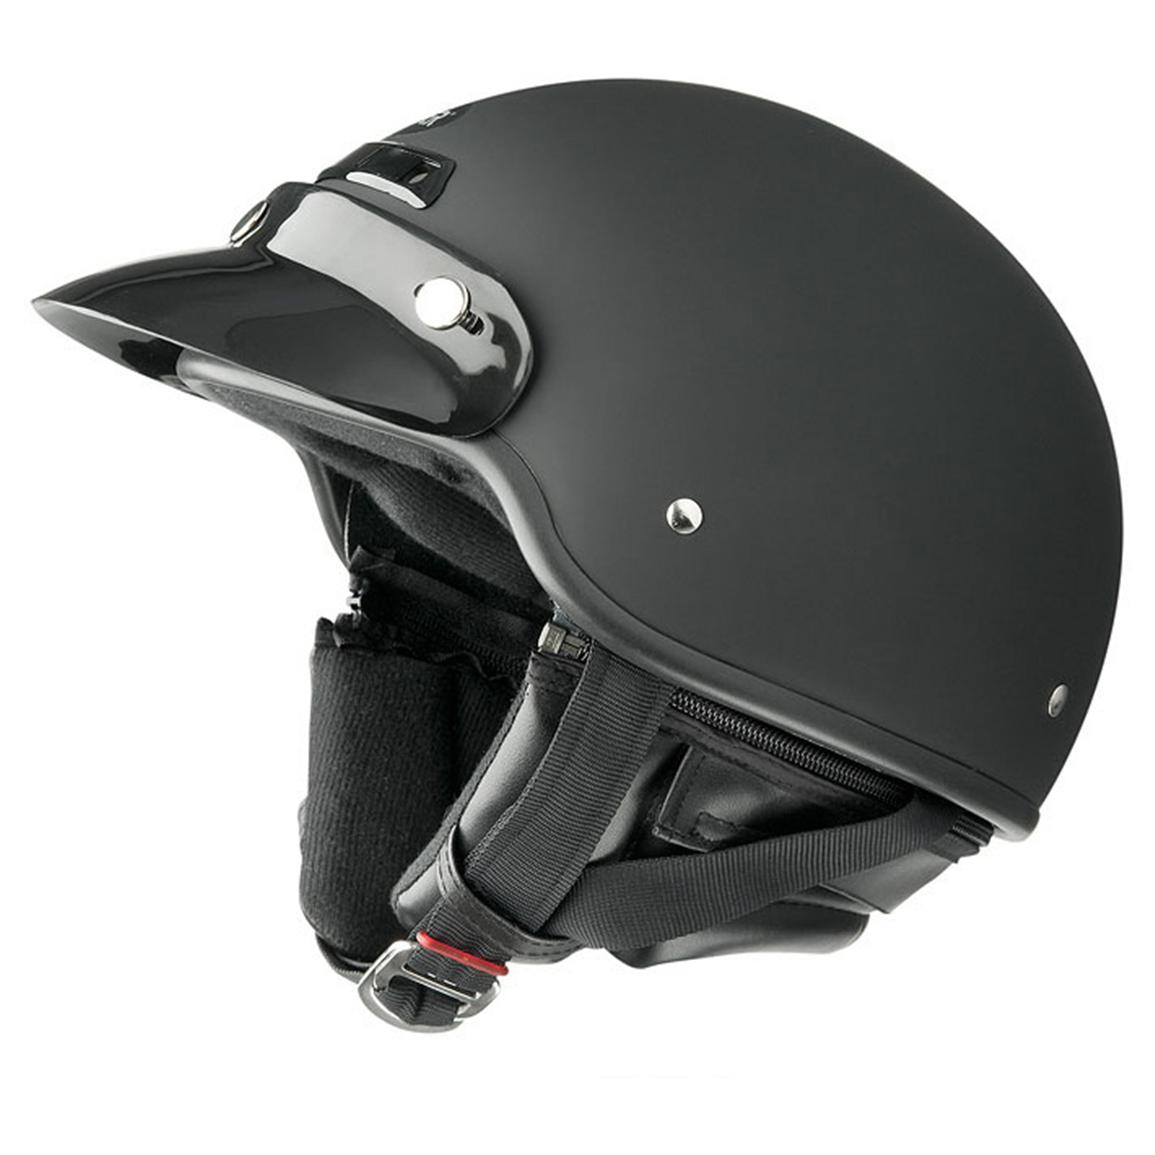 Raider Deluxe Half Motorcycle Helmet - 216793, Helmets & Goggles at